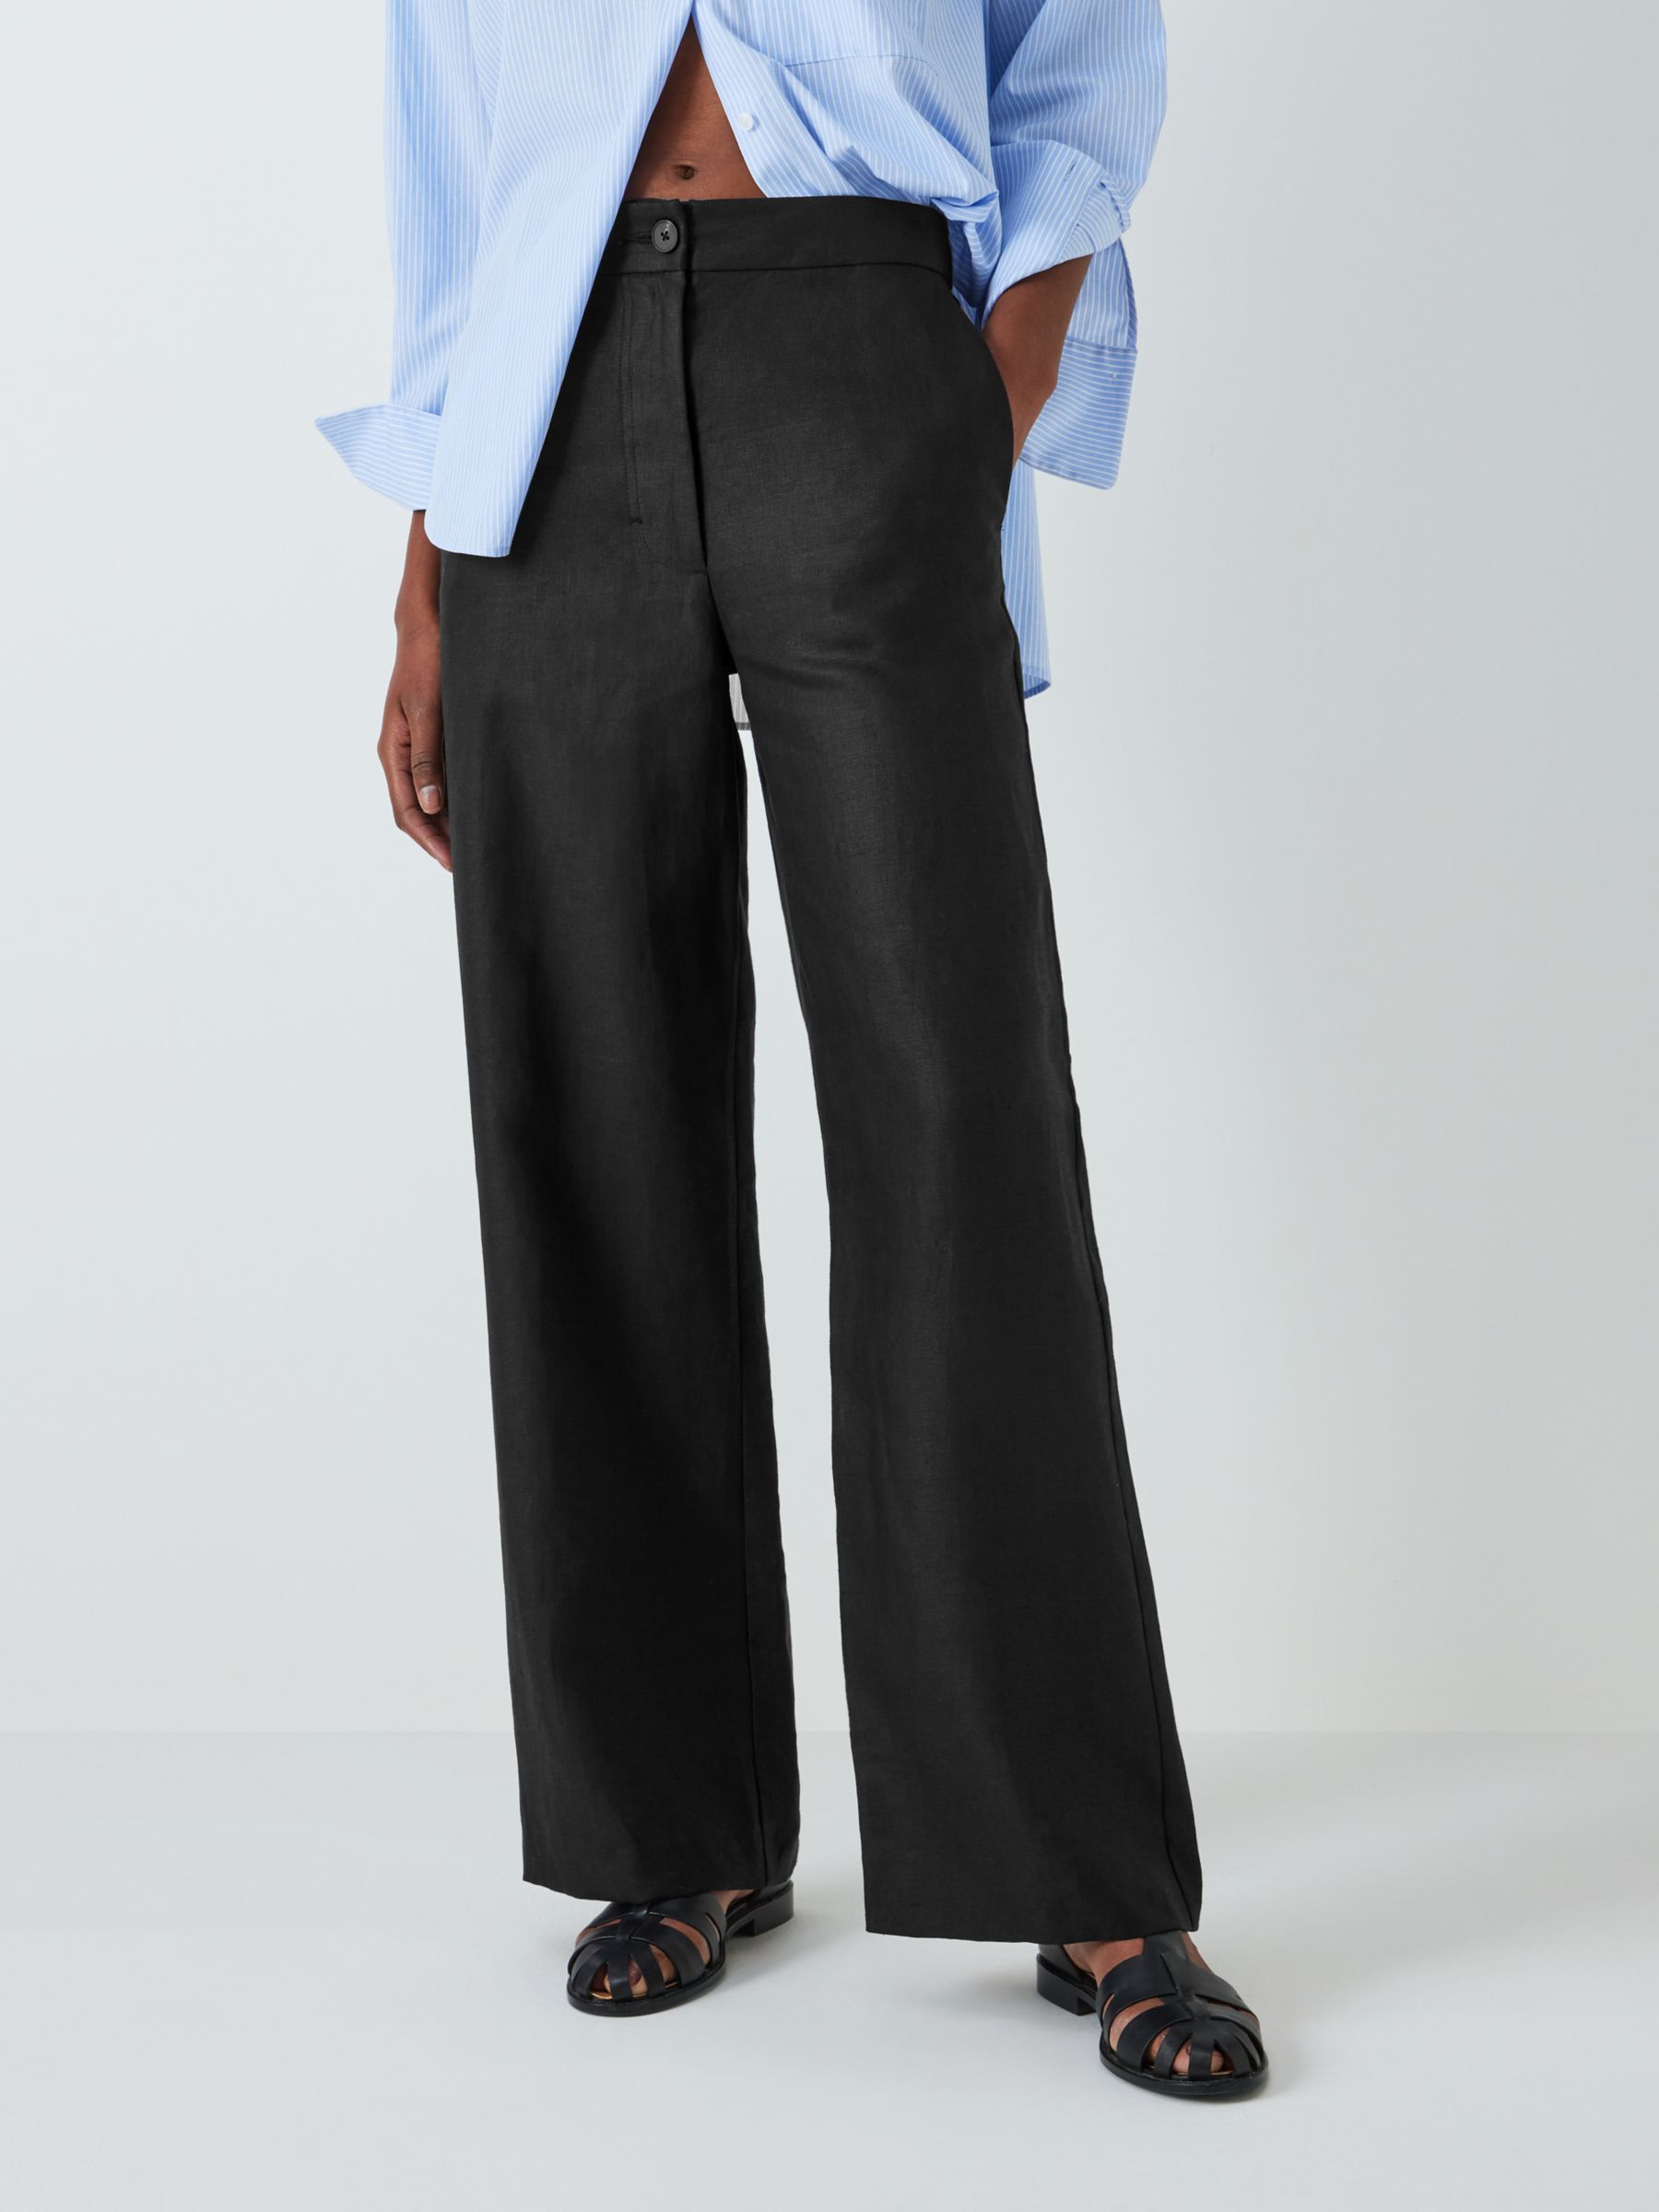 Buy Women's Black Straight Trousers Online